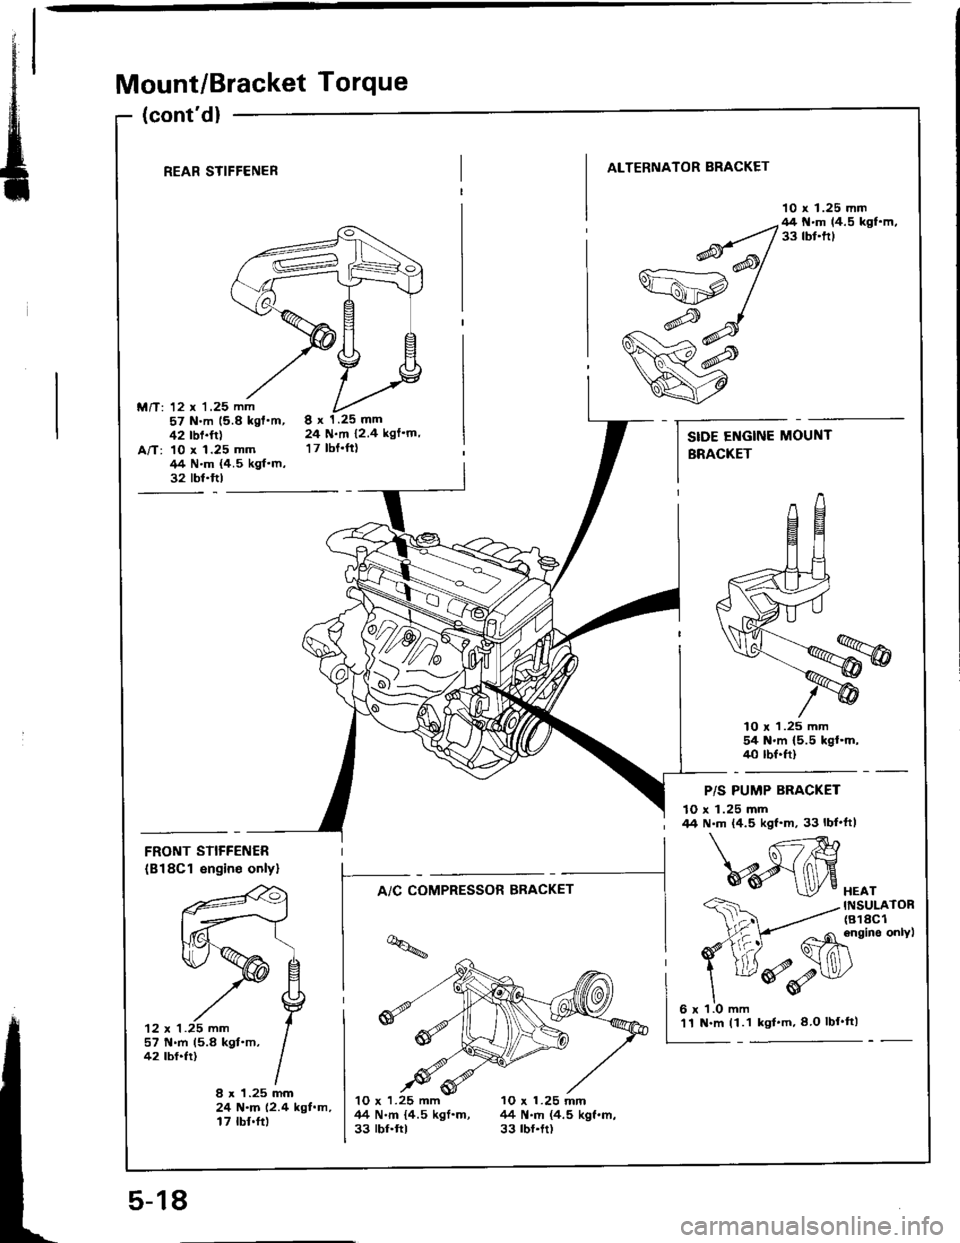 ACURA INTEGRA 1994  Service Repair Manual Mount/Bracket Torque
(contd)
REAR STIFFENER
M/T: 12 x 1.25 mm57 N.m 15.8 kgfm,42 rbf.ft)A/T: 10 x 1.25 mm/14 N.m {4.5 kgf.m,32 tbt.ftl
ALTERNATOR BRACKET
10 x 1.25 mm
8x1.25mm24 N.m 12.4 kgfm,
17 